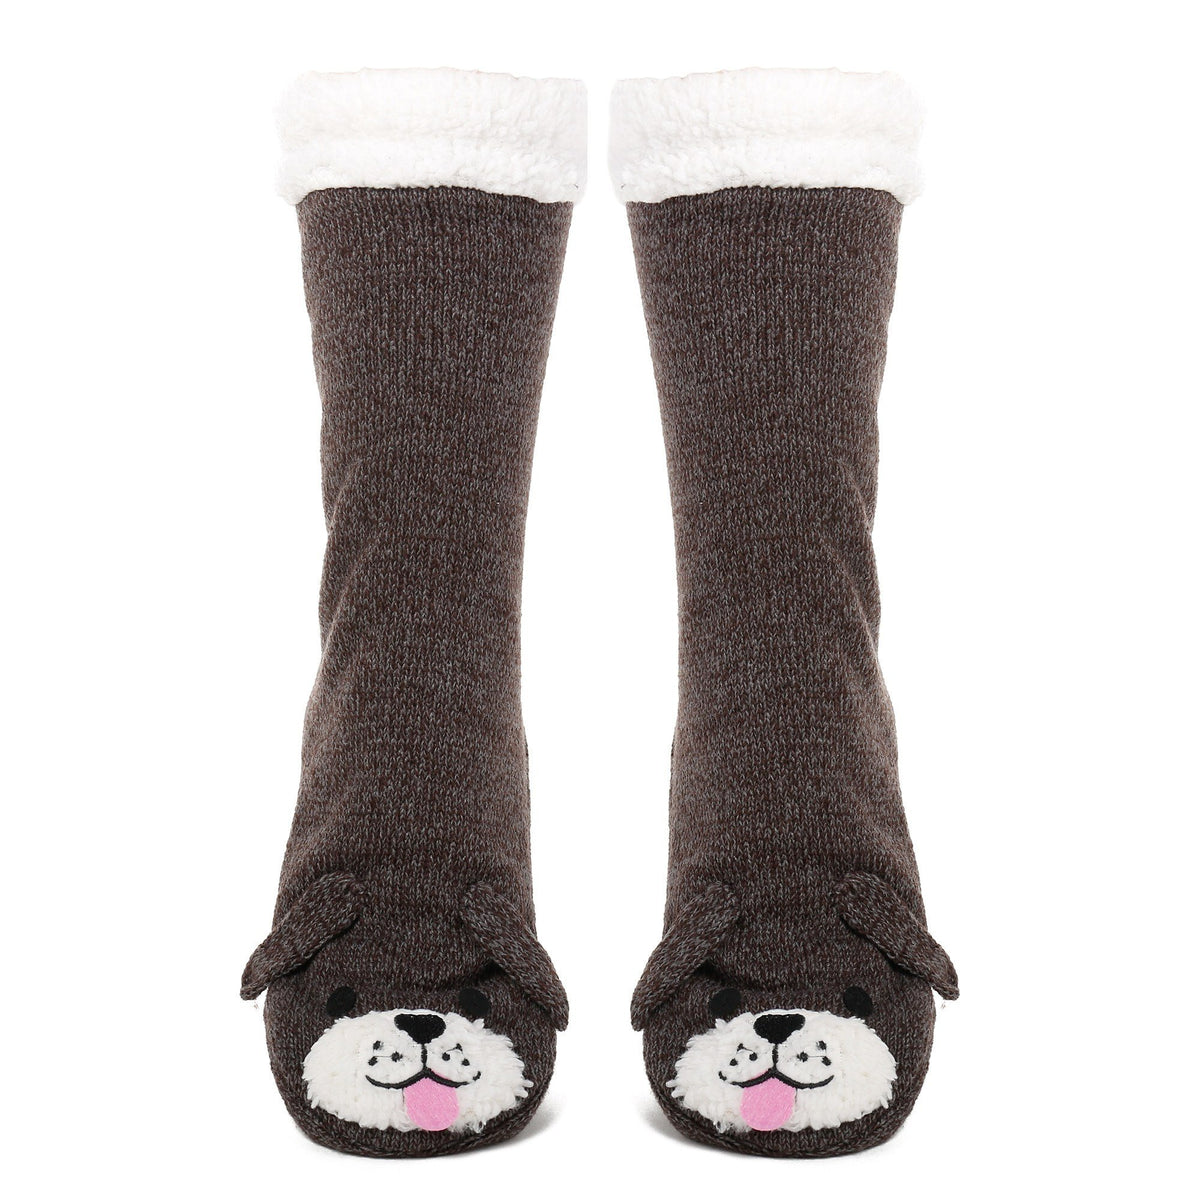 Women's Cute Knit Dog Slipper Socks - Black/Grey